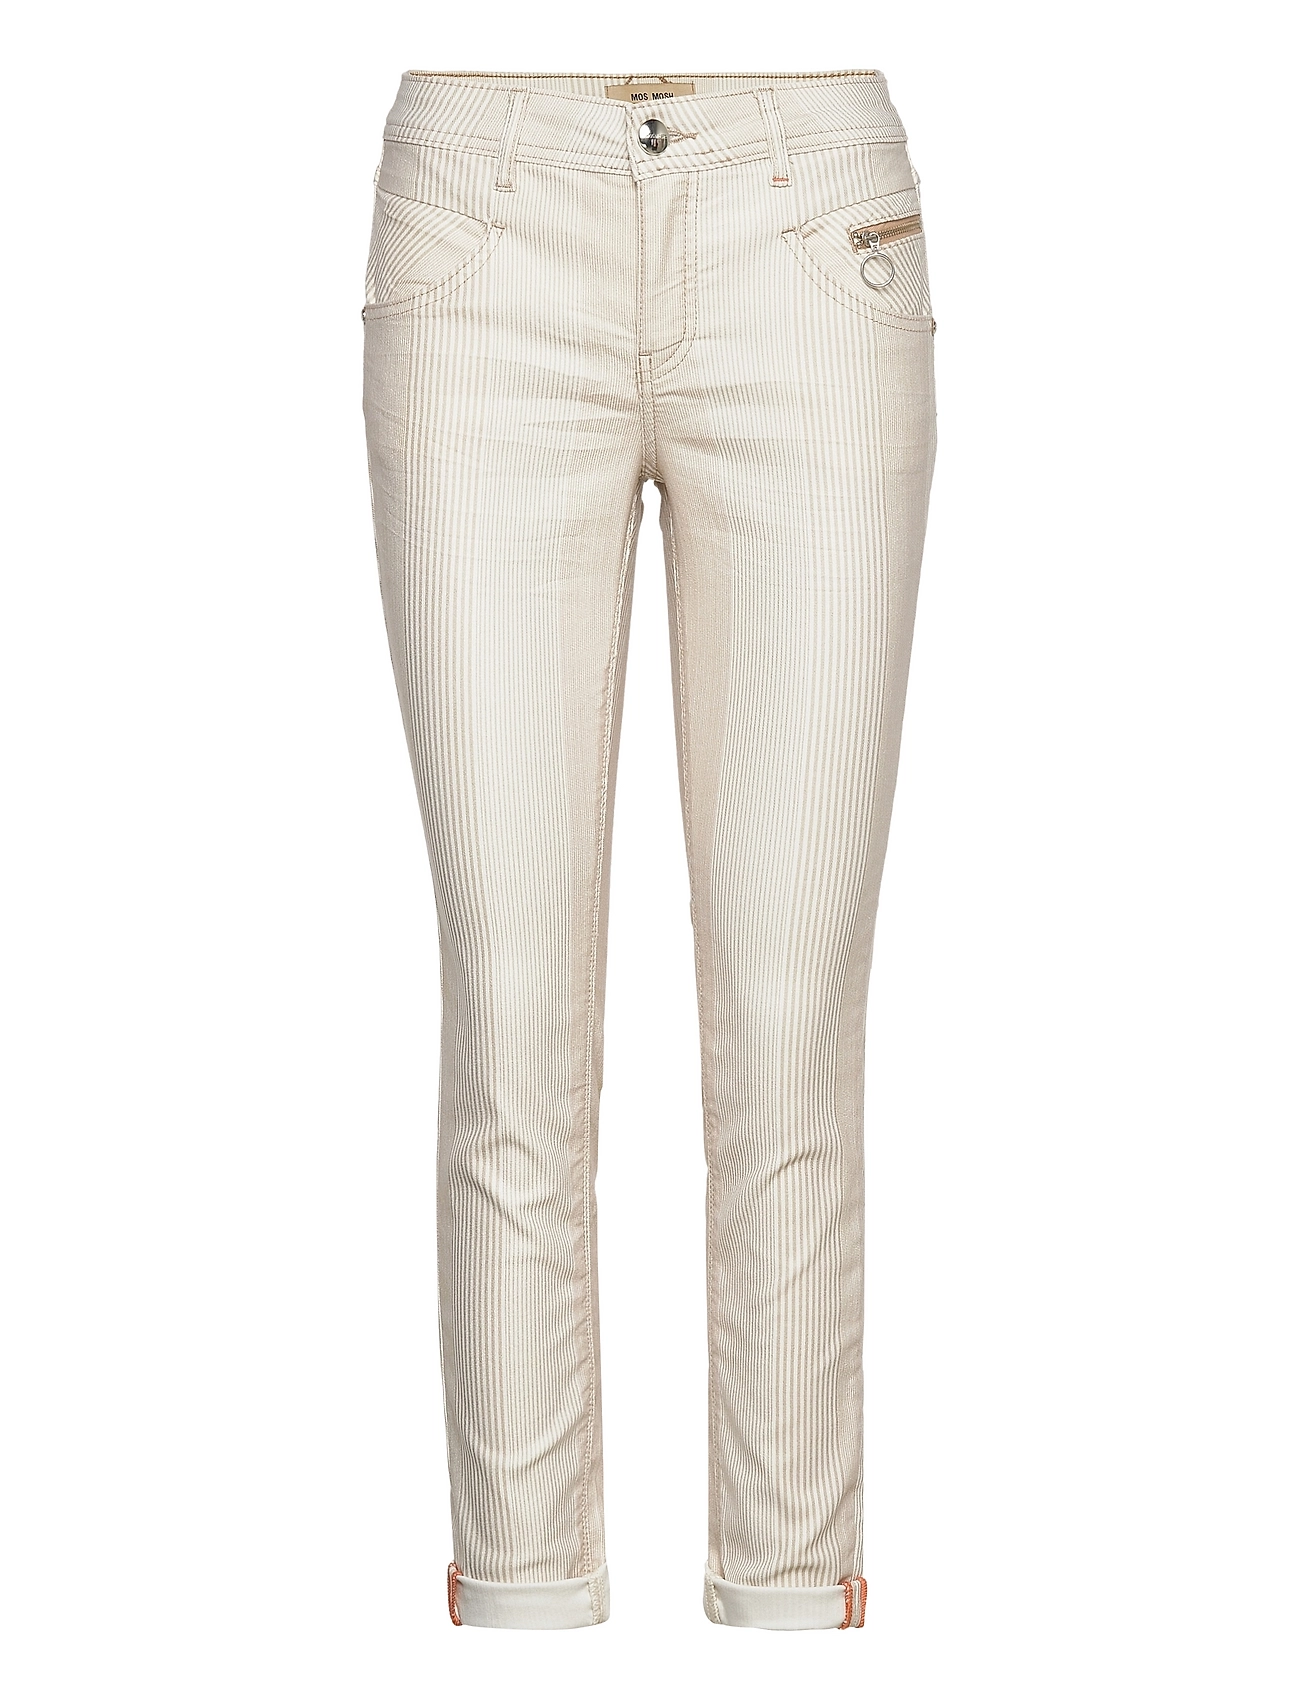 Jane Austen George Stevenson aIDS MOS MOSH Nelly Feather Stripe Pant - Skinny jeans - Boozt.com